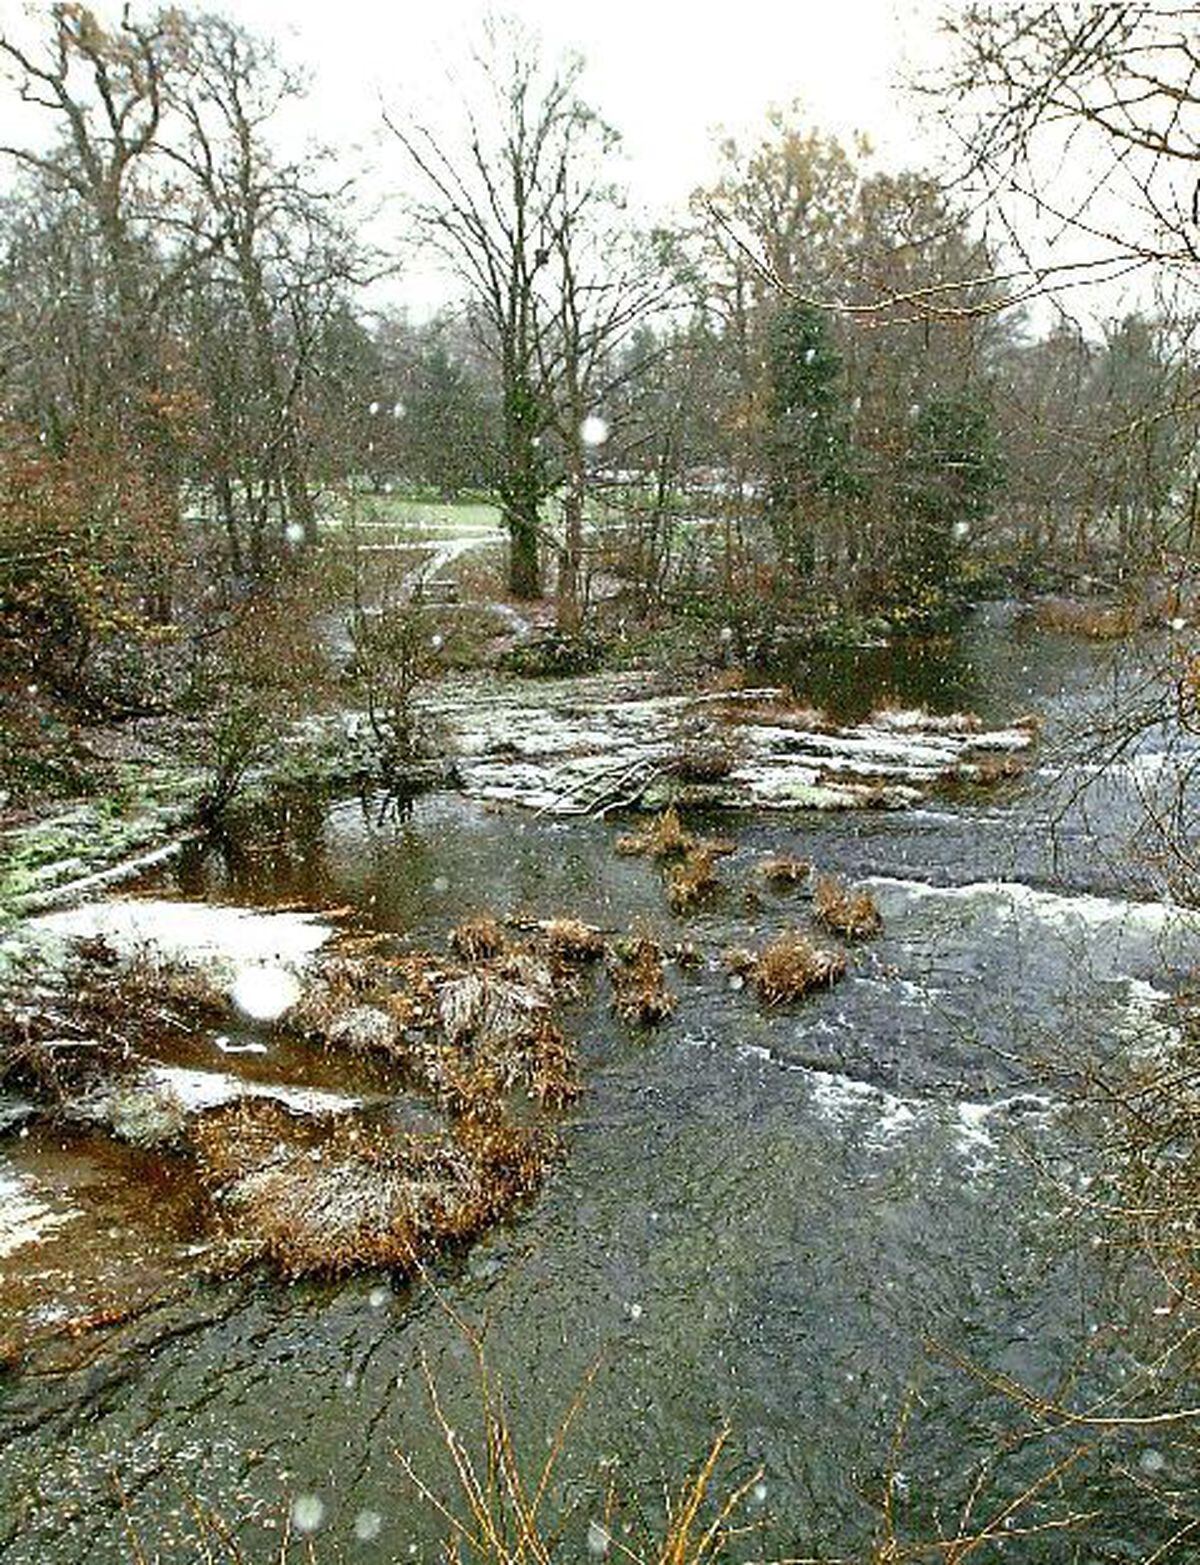 The River Severn flows through Newtown